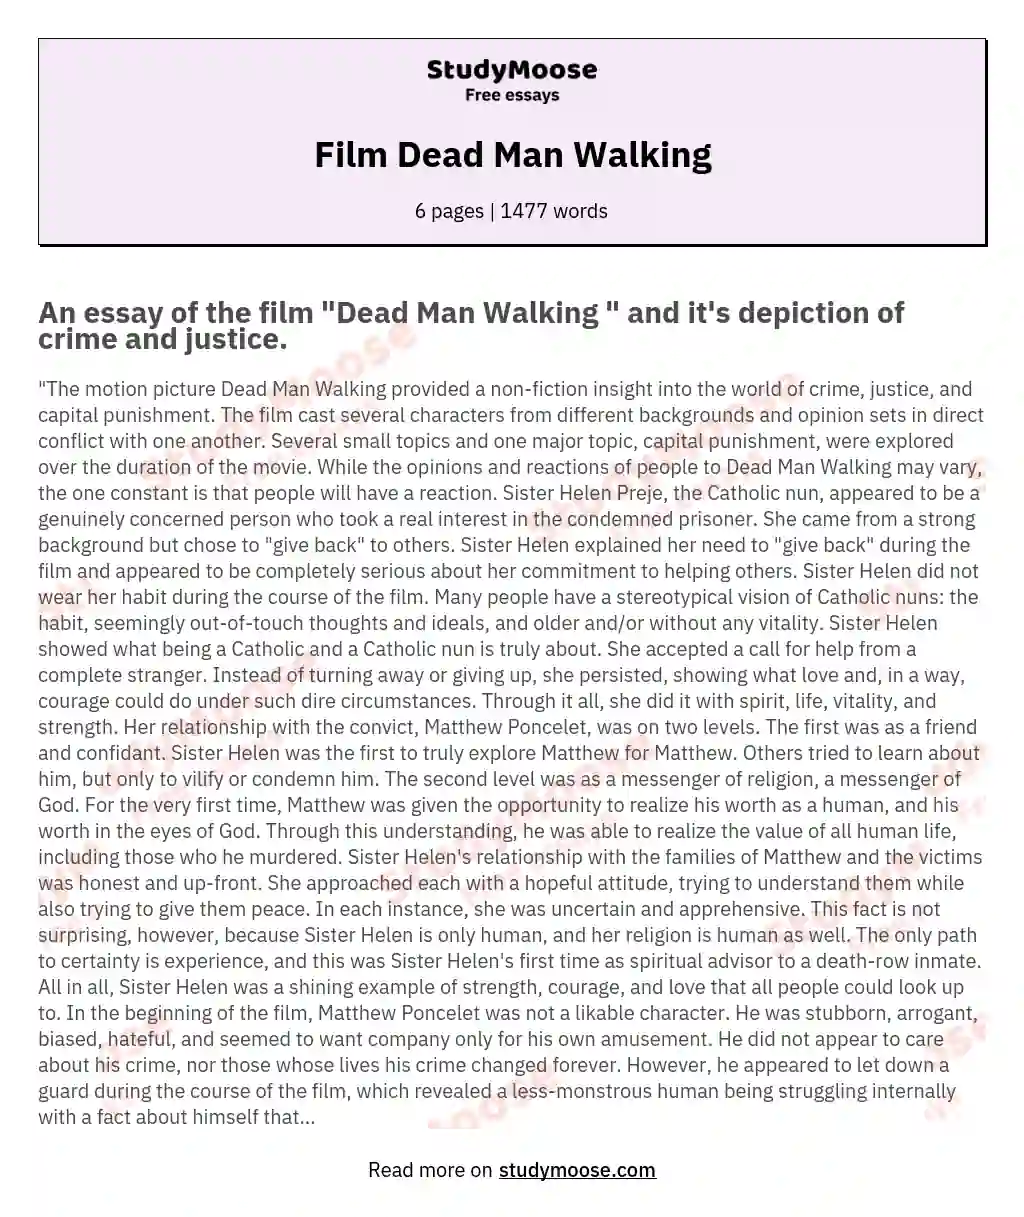 Film Dead Man Walking Free Essay Example